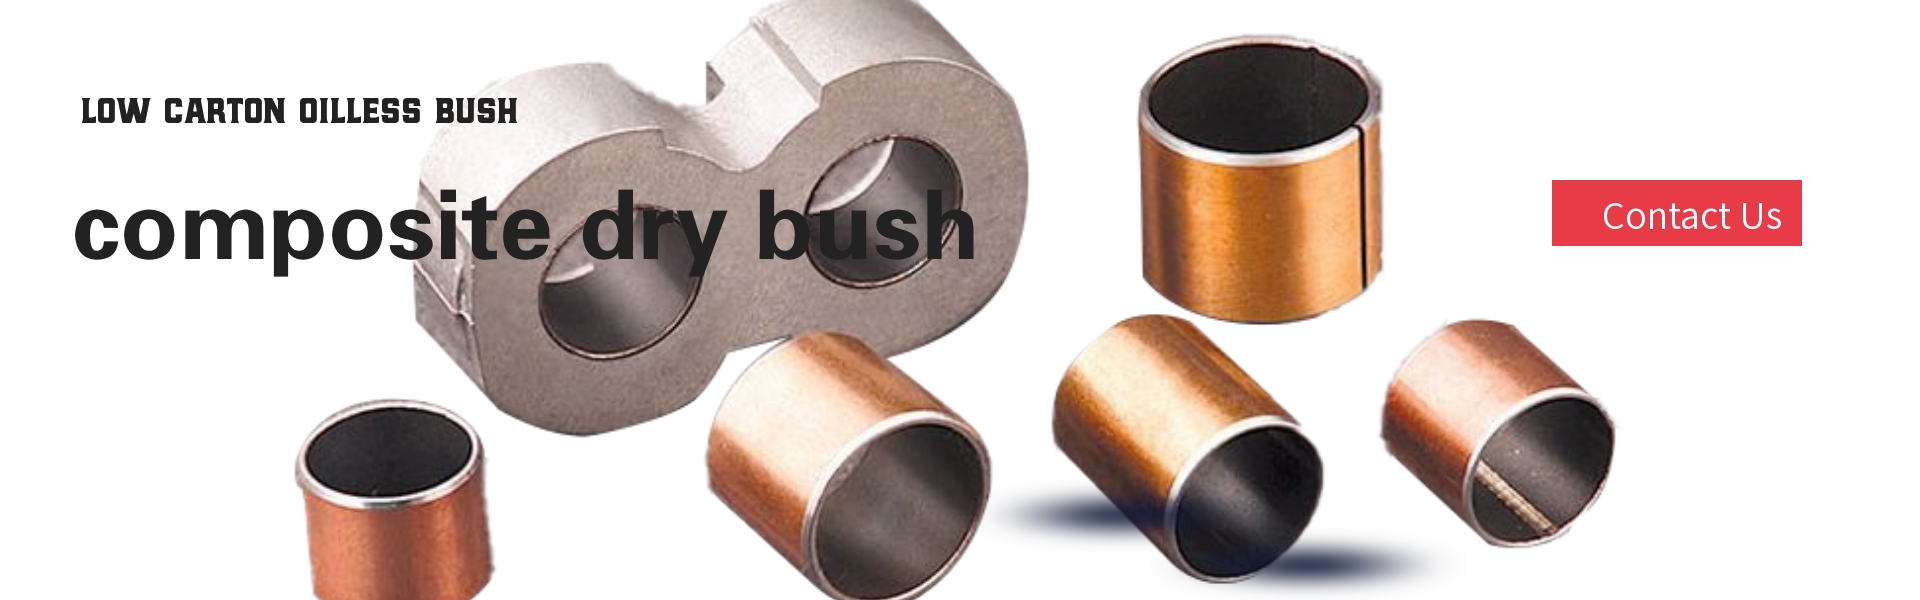 Low carton oilless bush bearing low friction composite dry bush thin wall steel bushings 